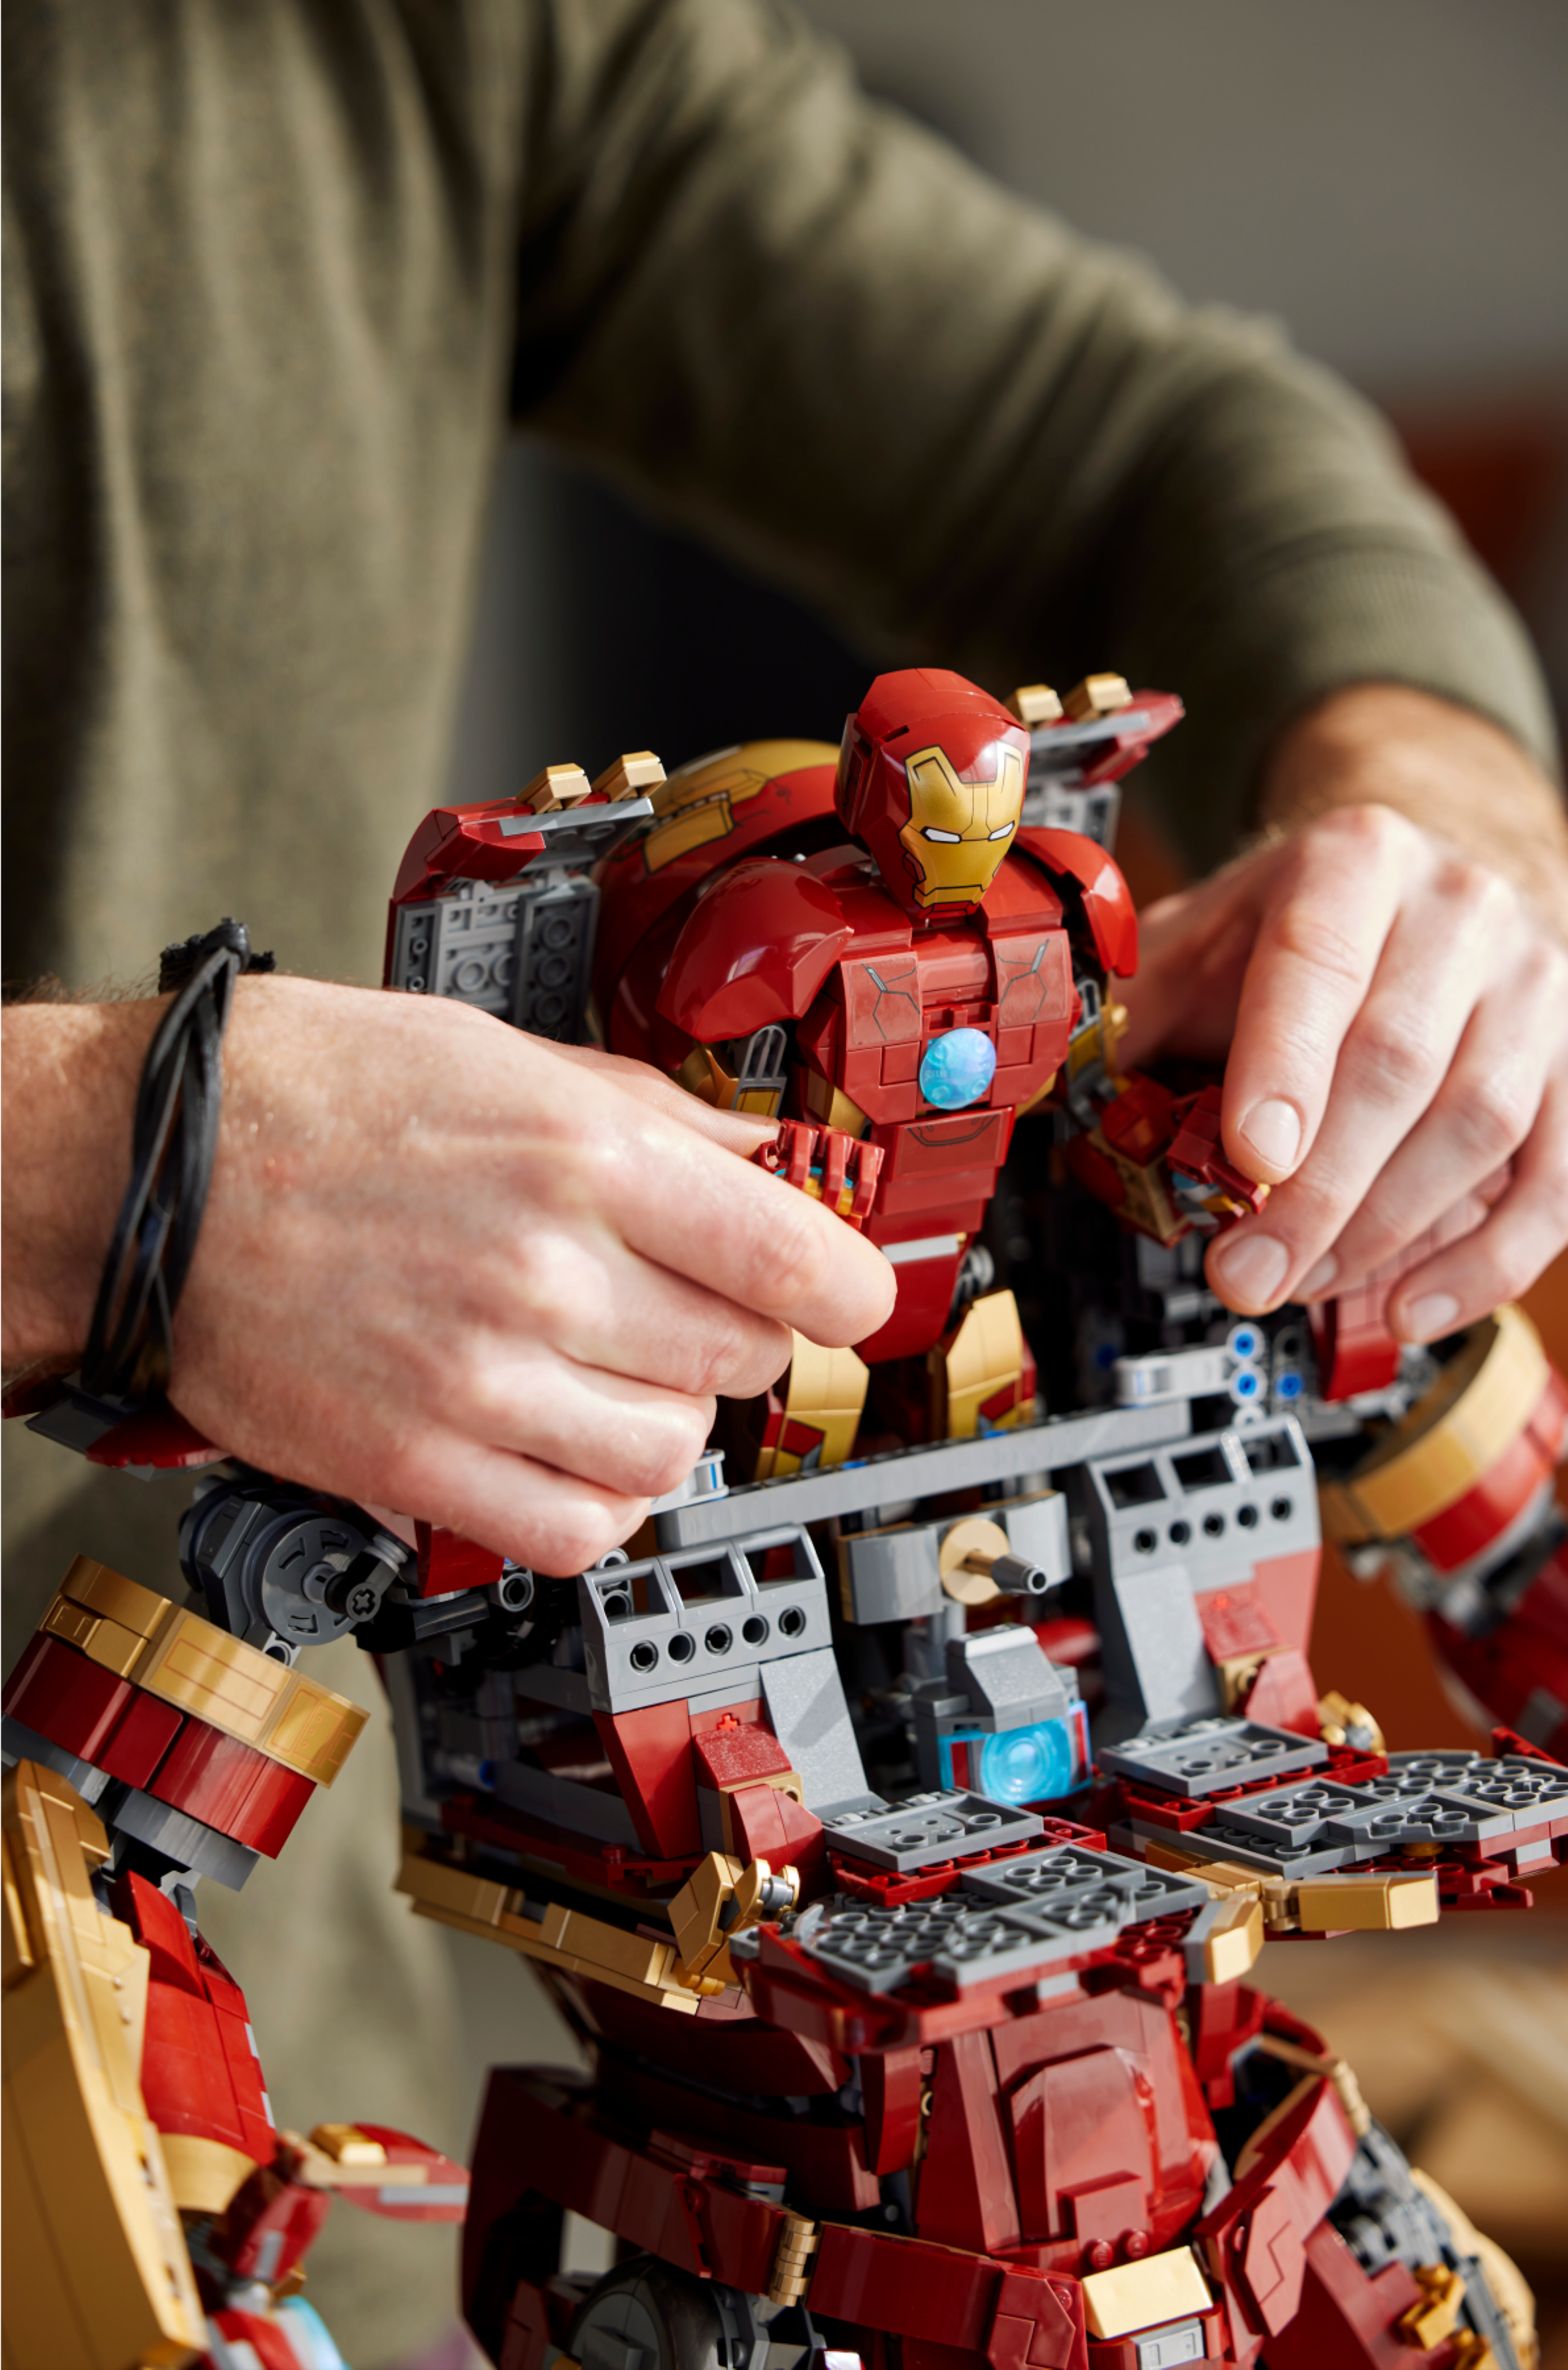 LEGO Marvel 76210 pas cher, L'armure Hulkbuster​